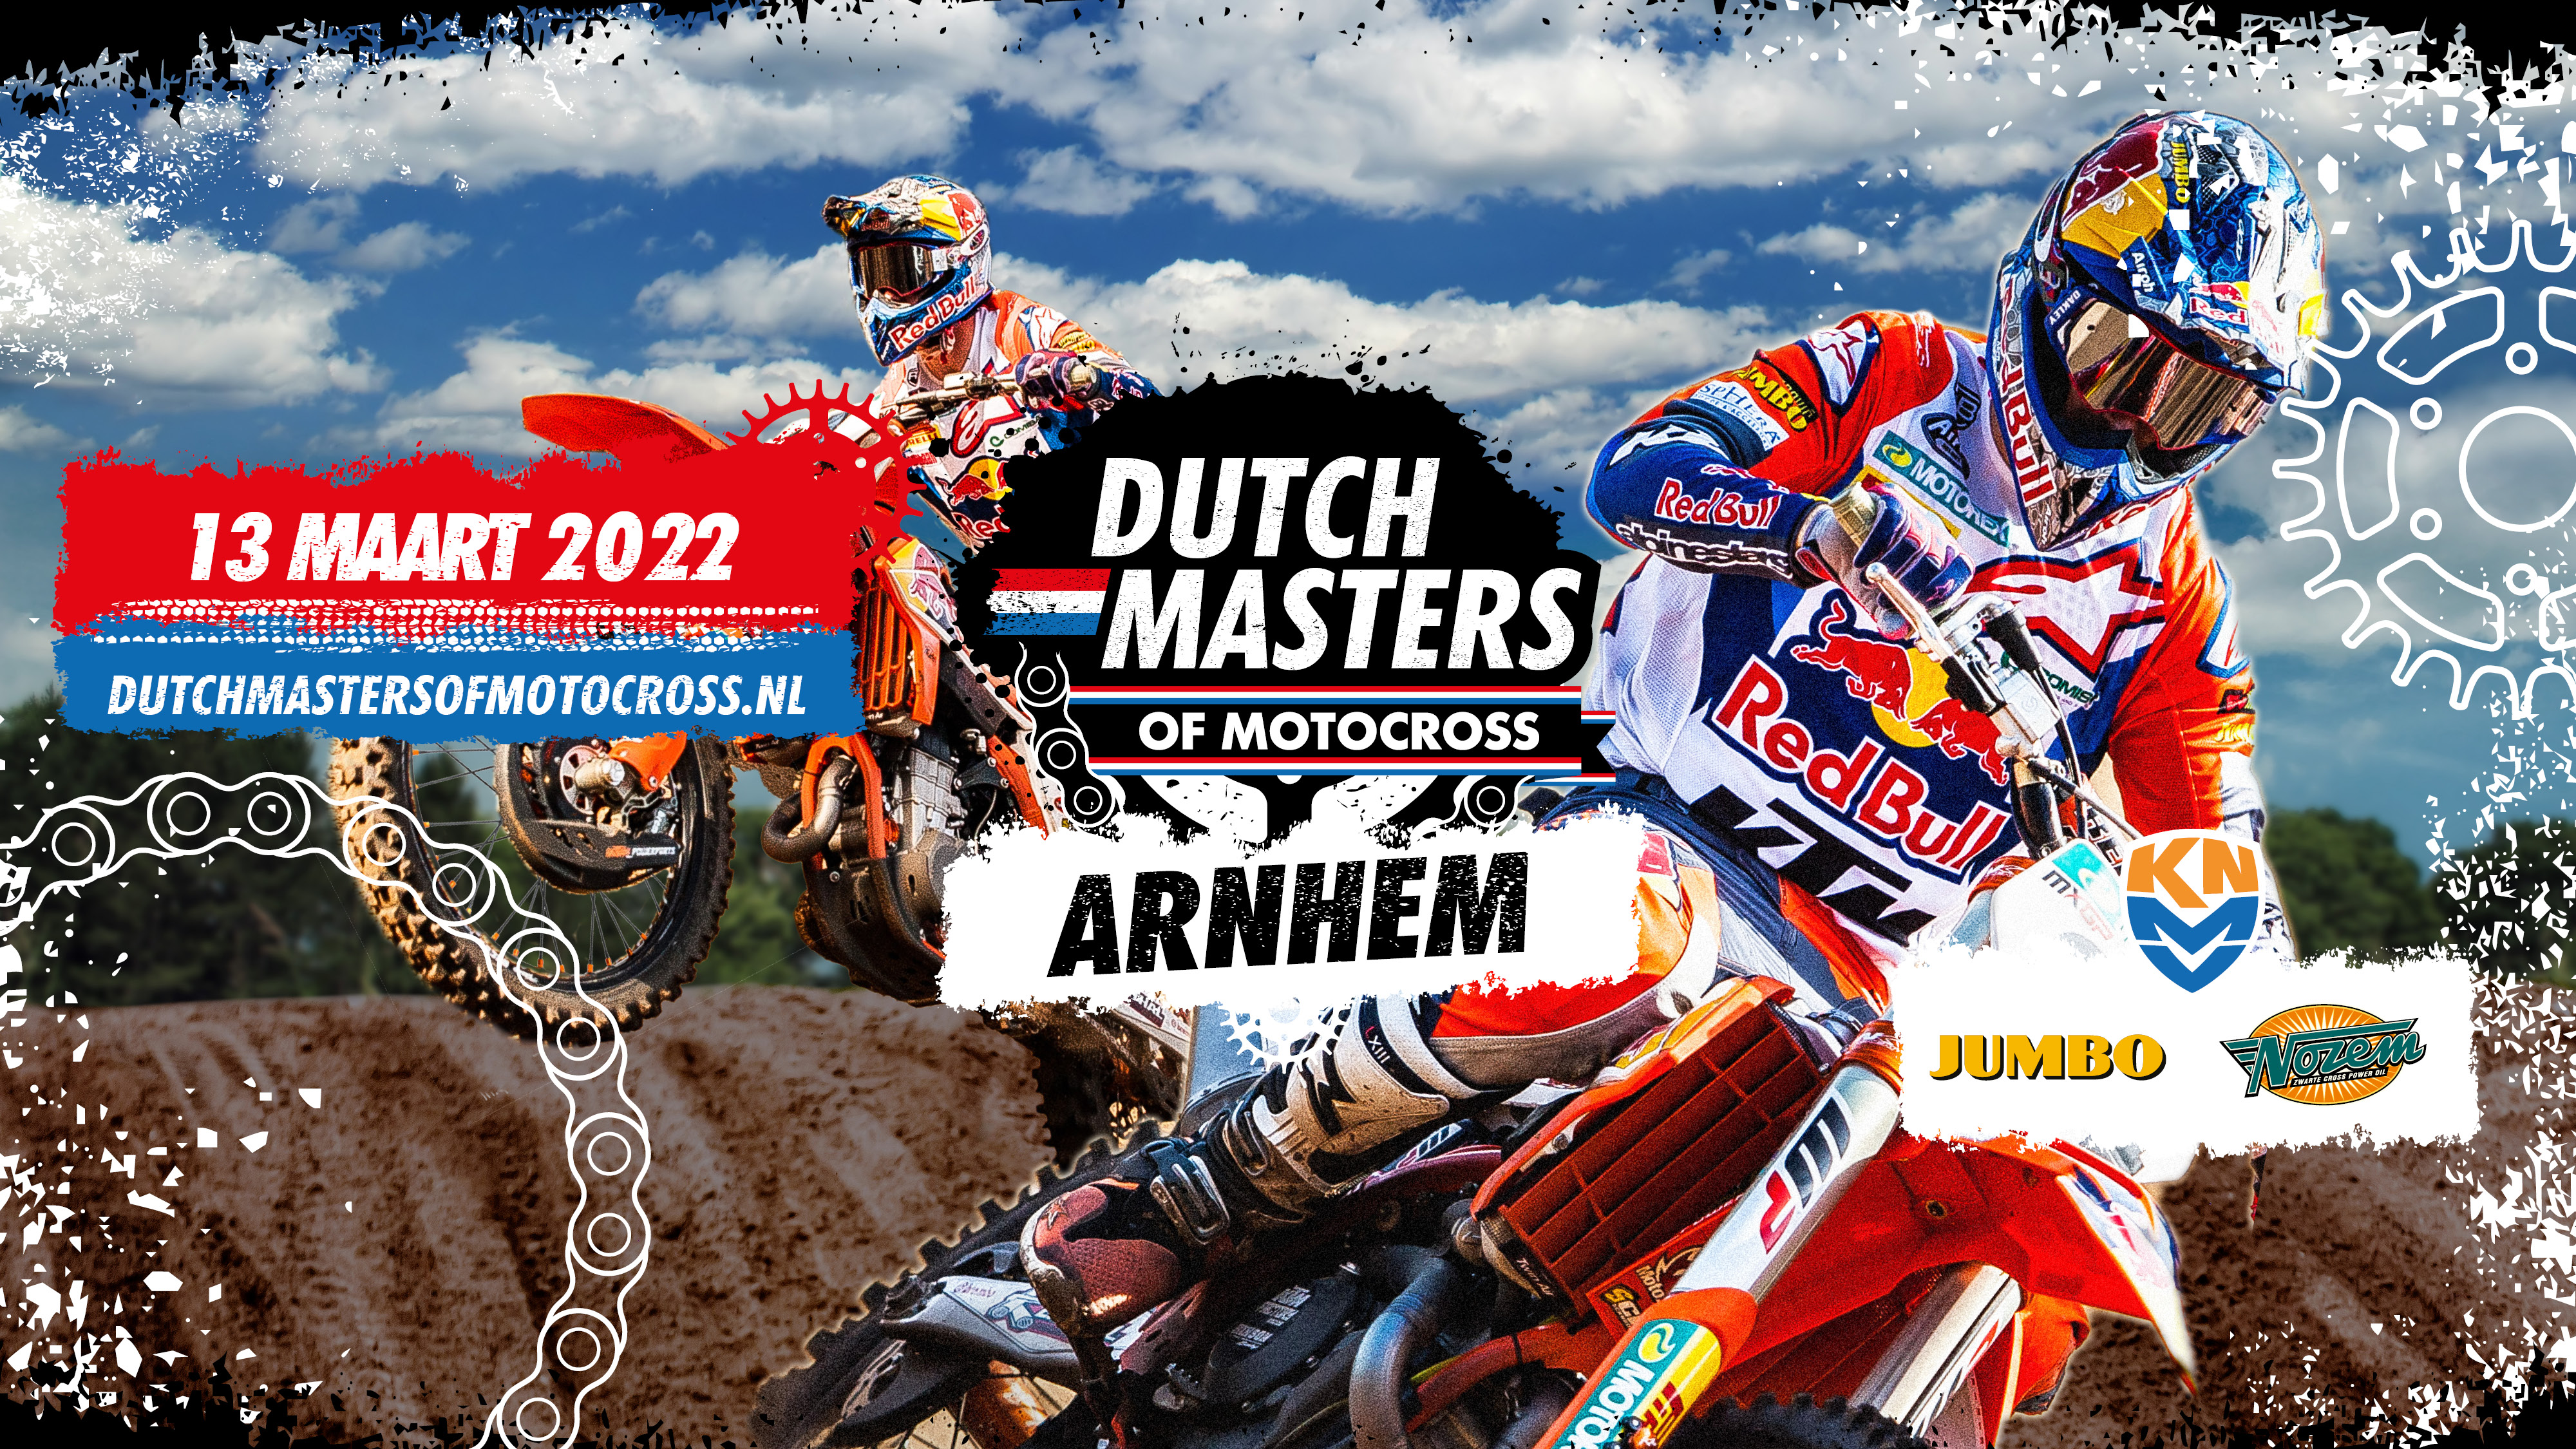 Dutch Masters Of Motocross '22 - Facebook Visual 1920x1080px Arnhem